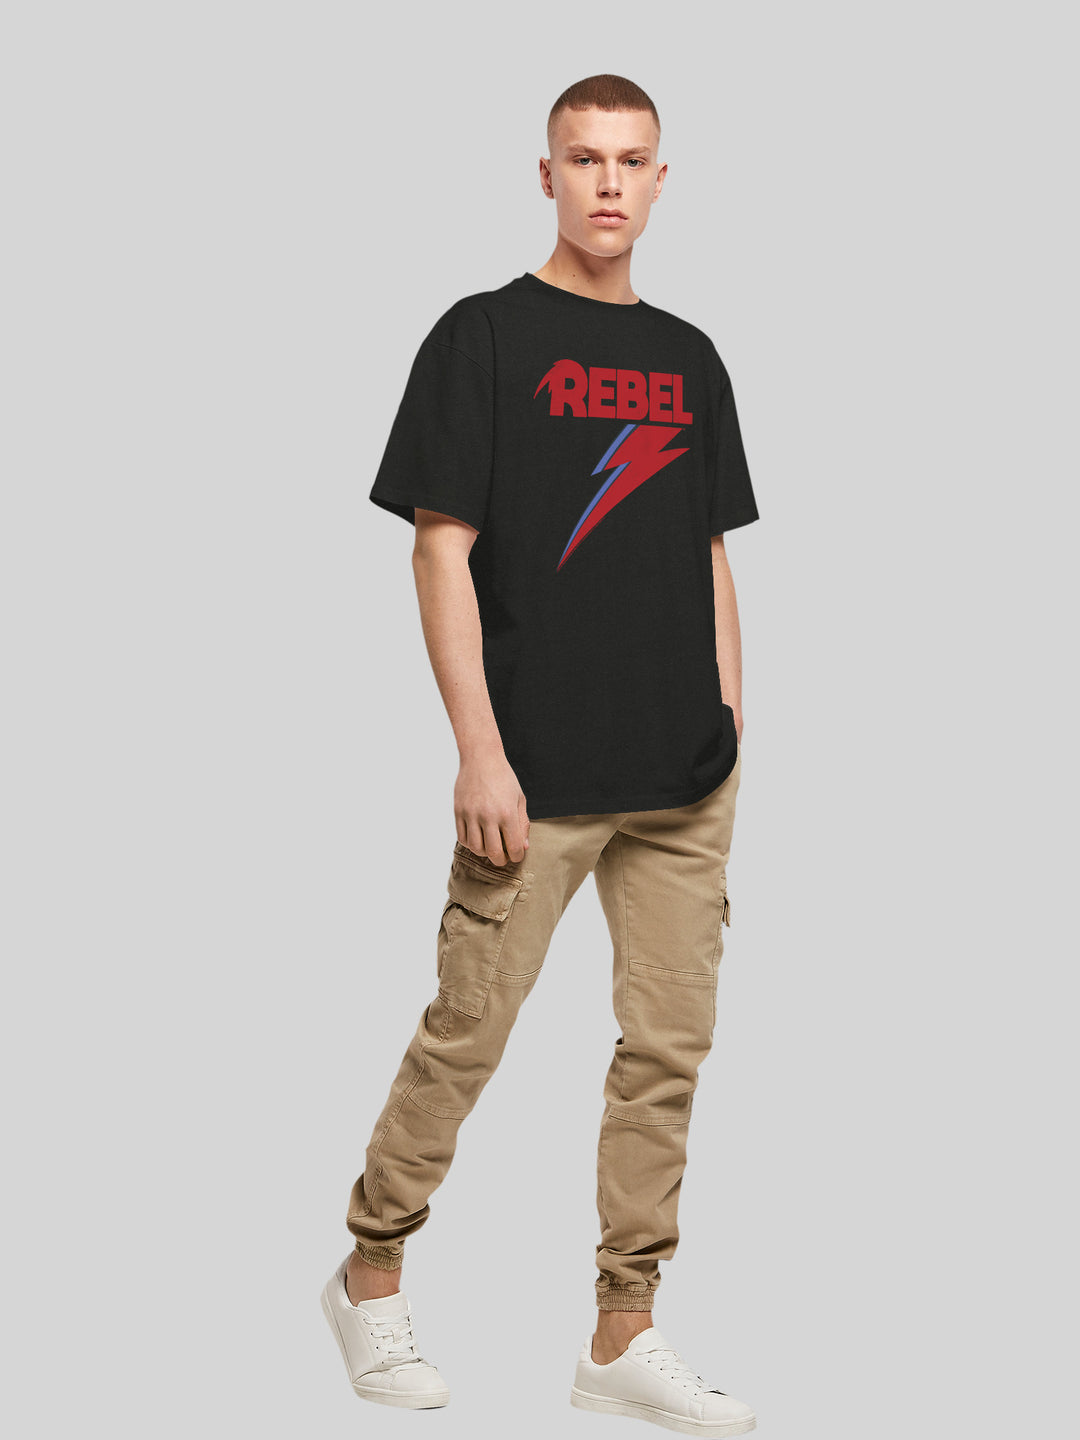 David Bowie T-Shirt | Distressed Rebel | Oversize Heavy Men T Shirt